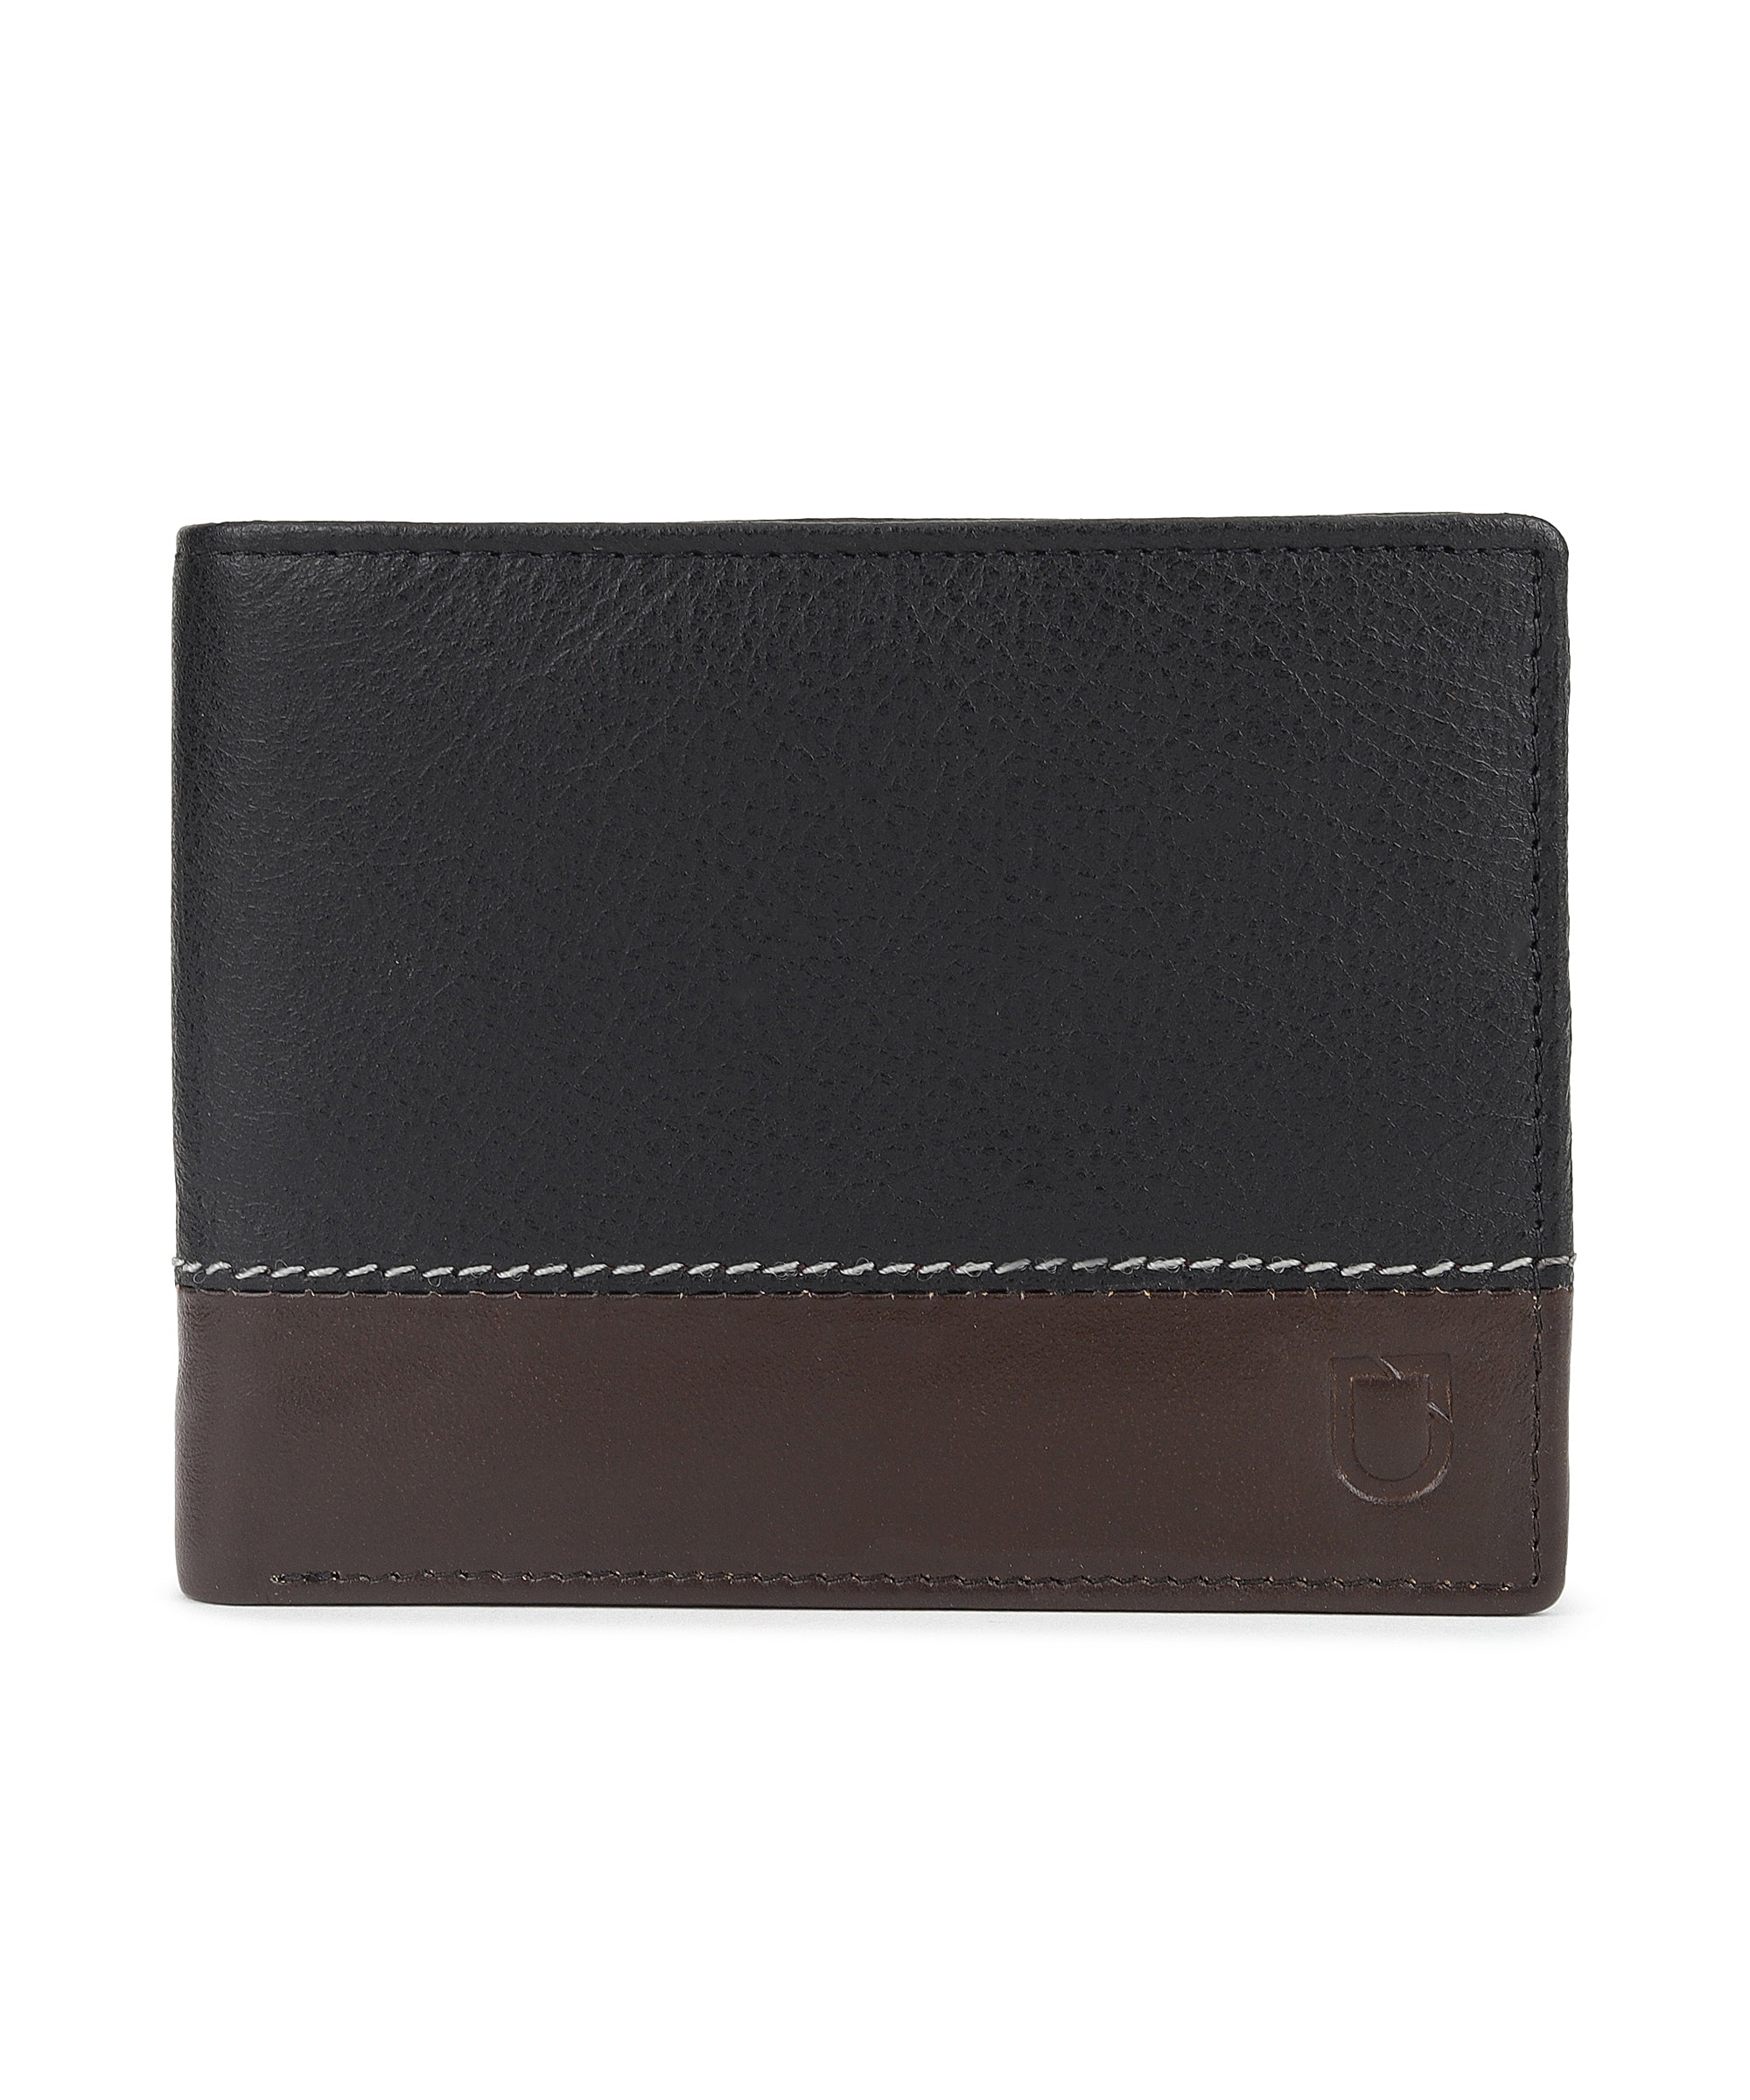 Urbano Fashion Men's Casual, Formal Black Genuine Leather Wallet -12 Card Slots